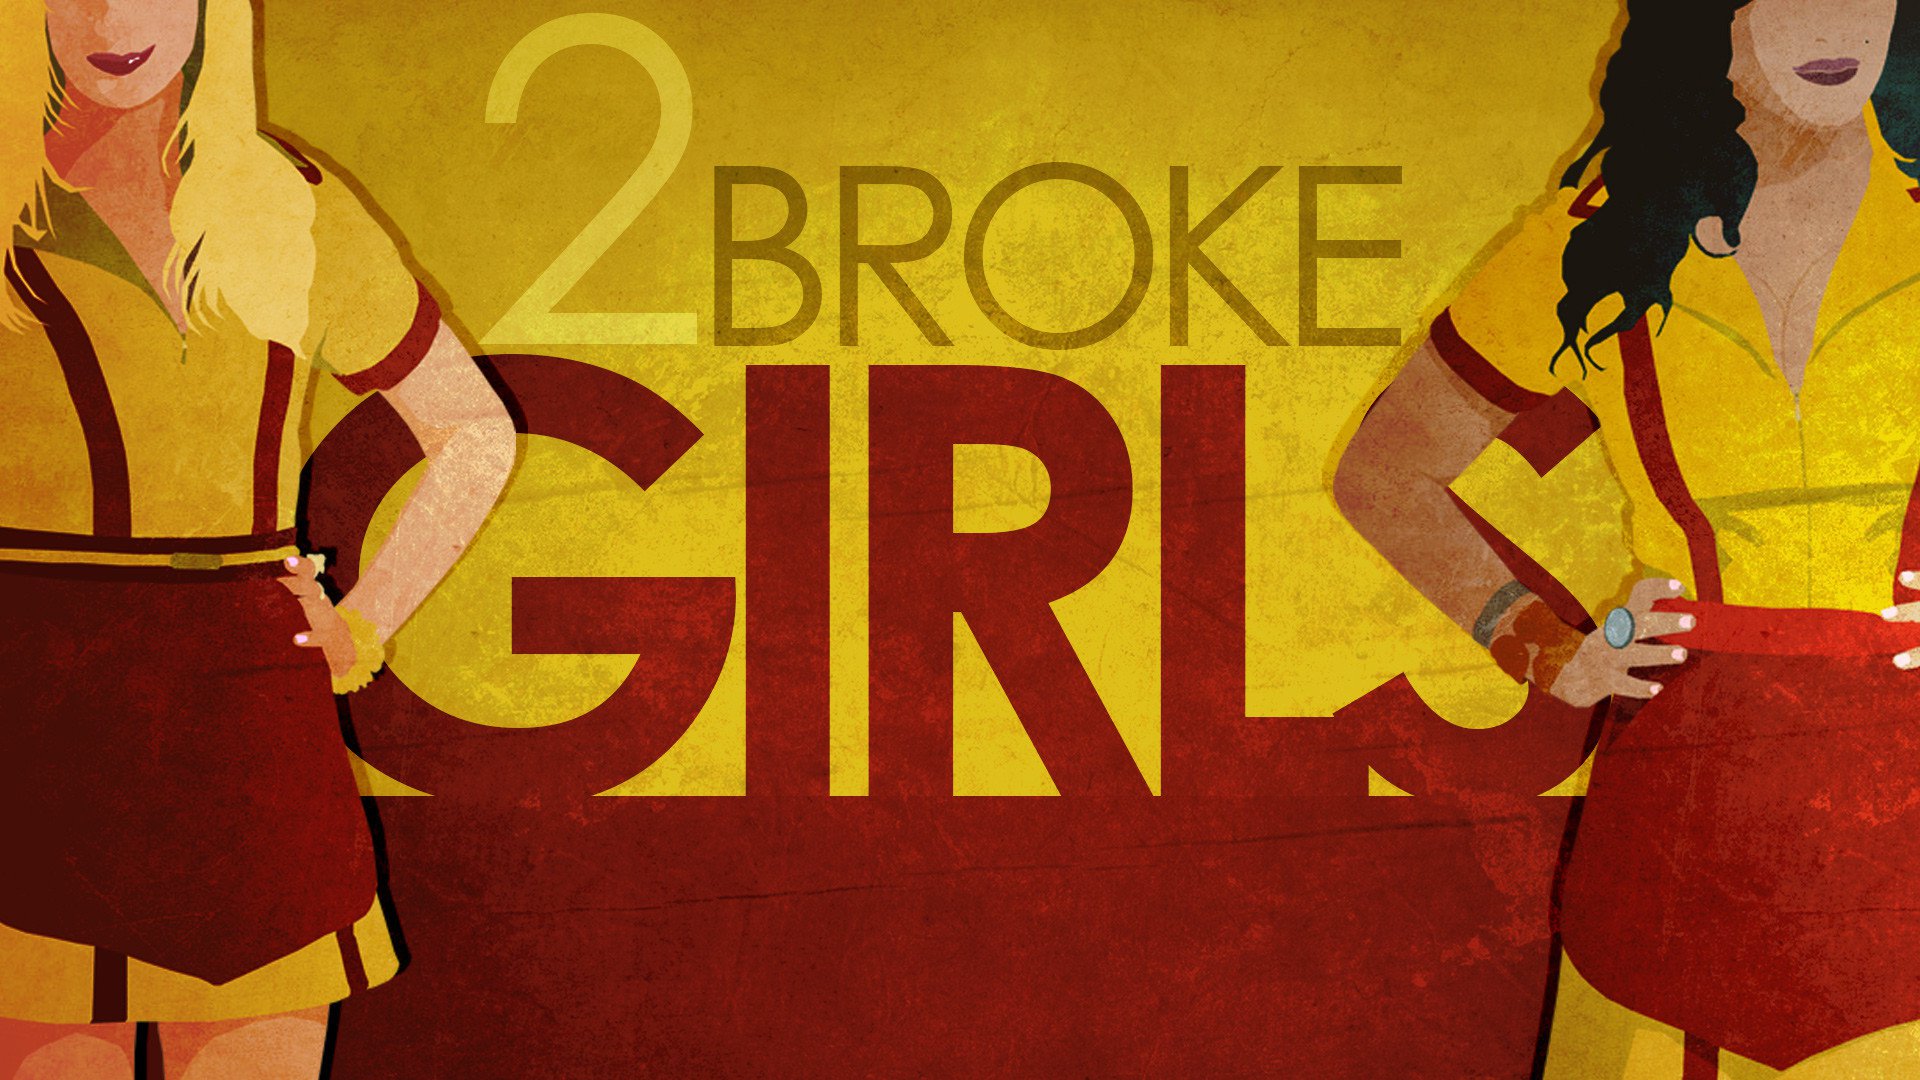 tv show, 2 broke girls